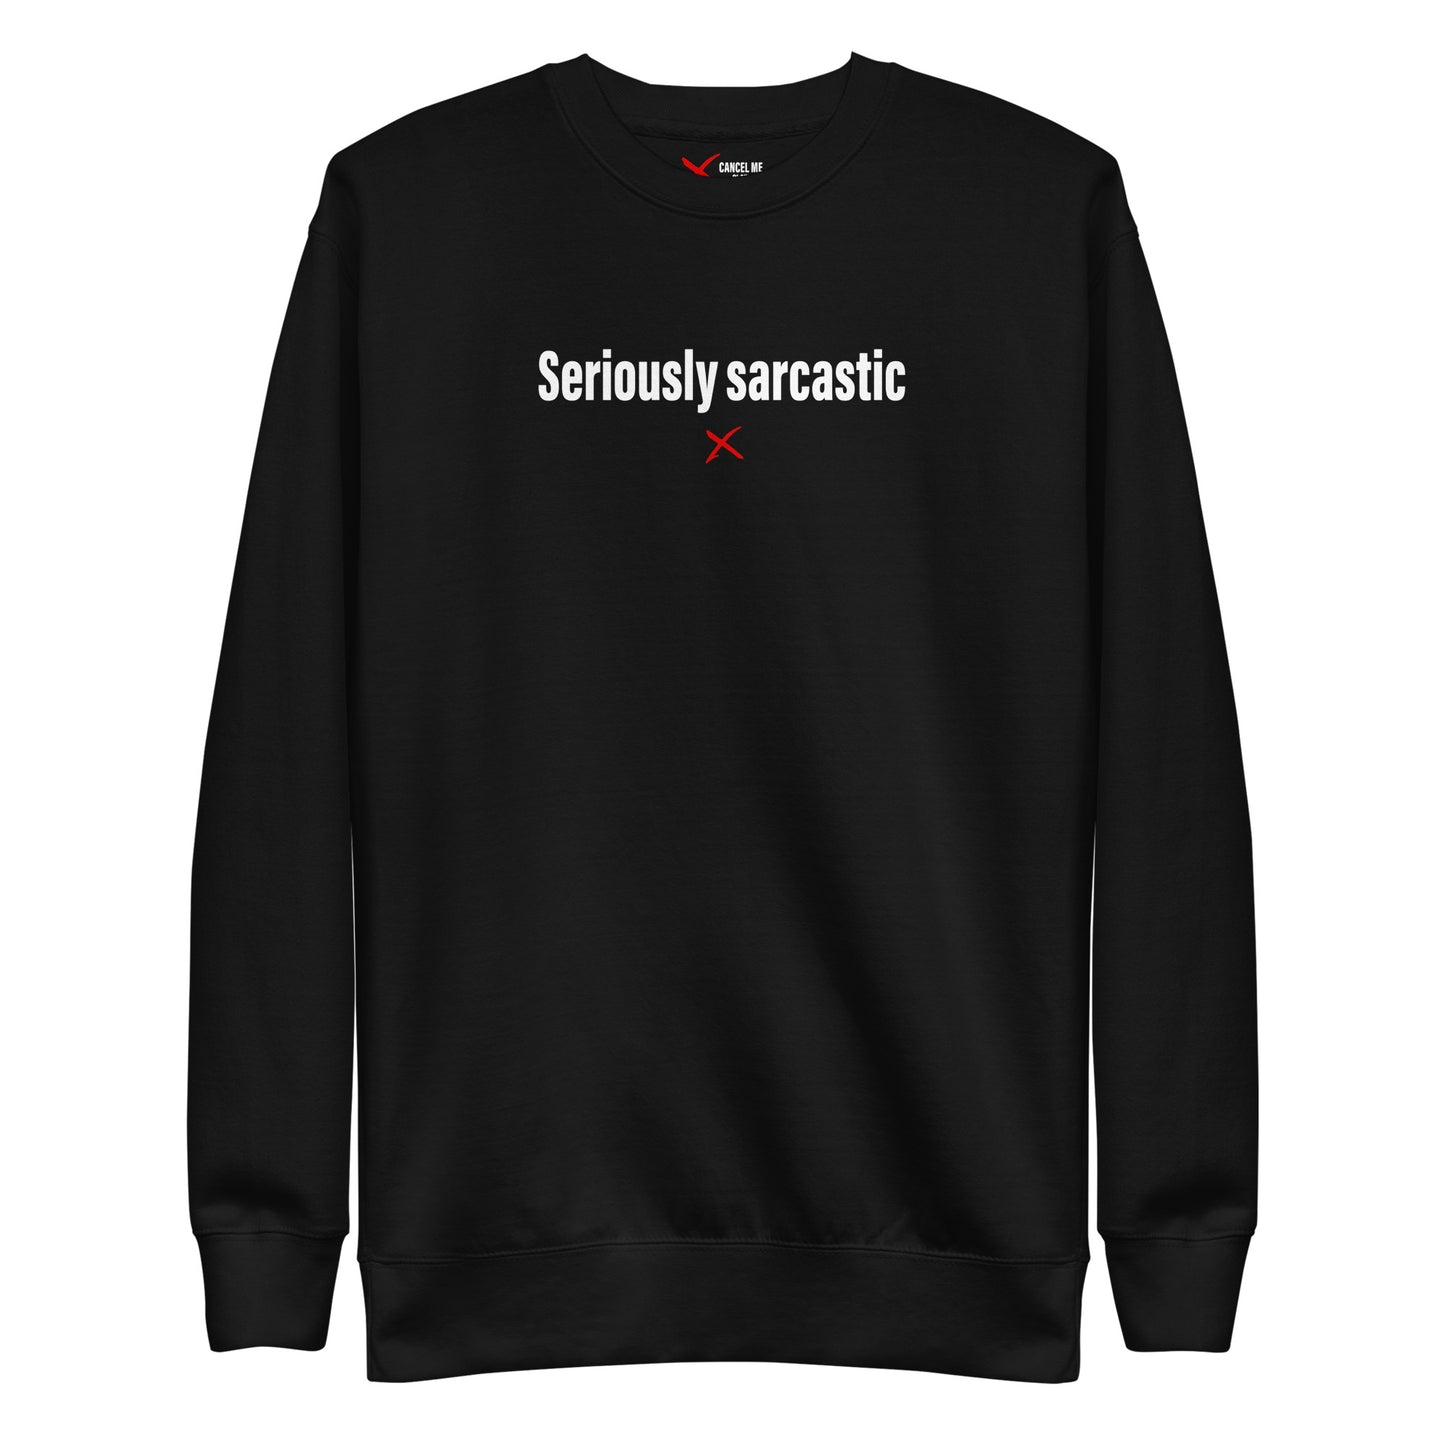 Seriously sarcastic - Sweatshirt